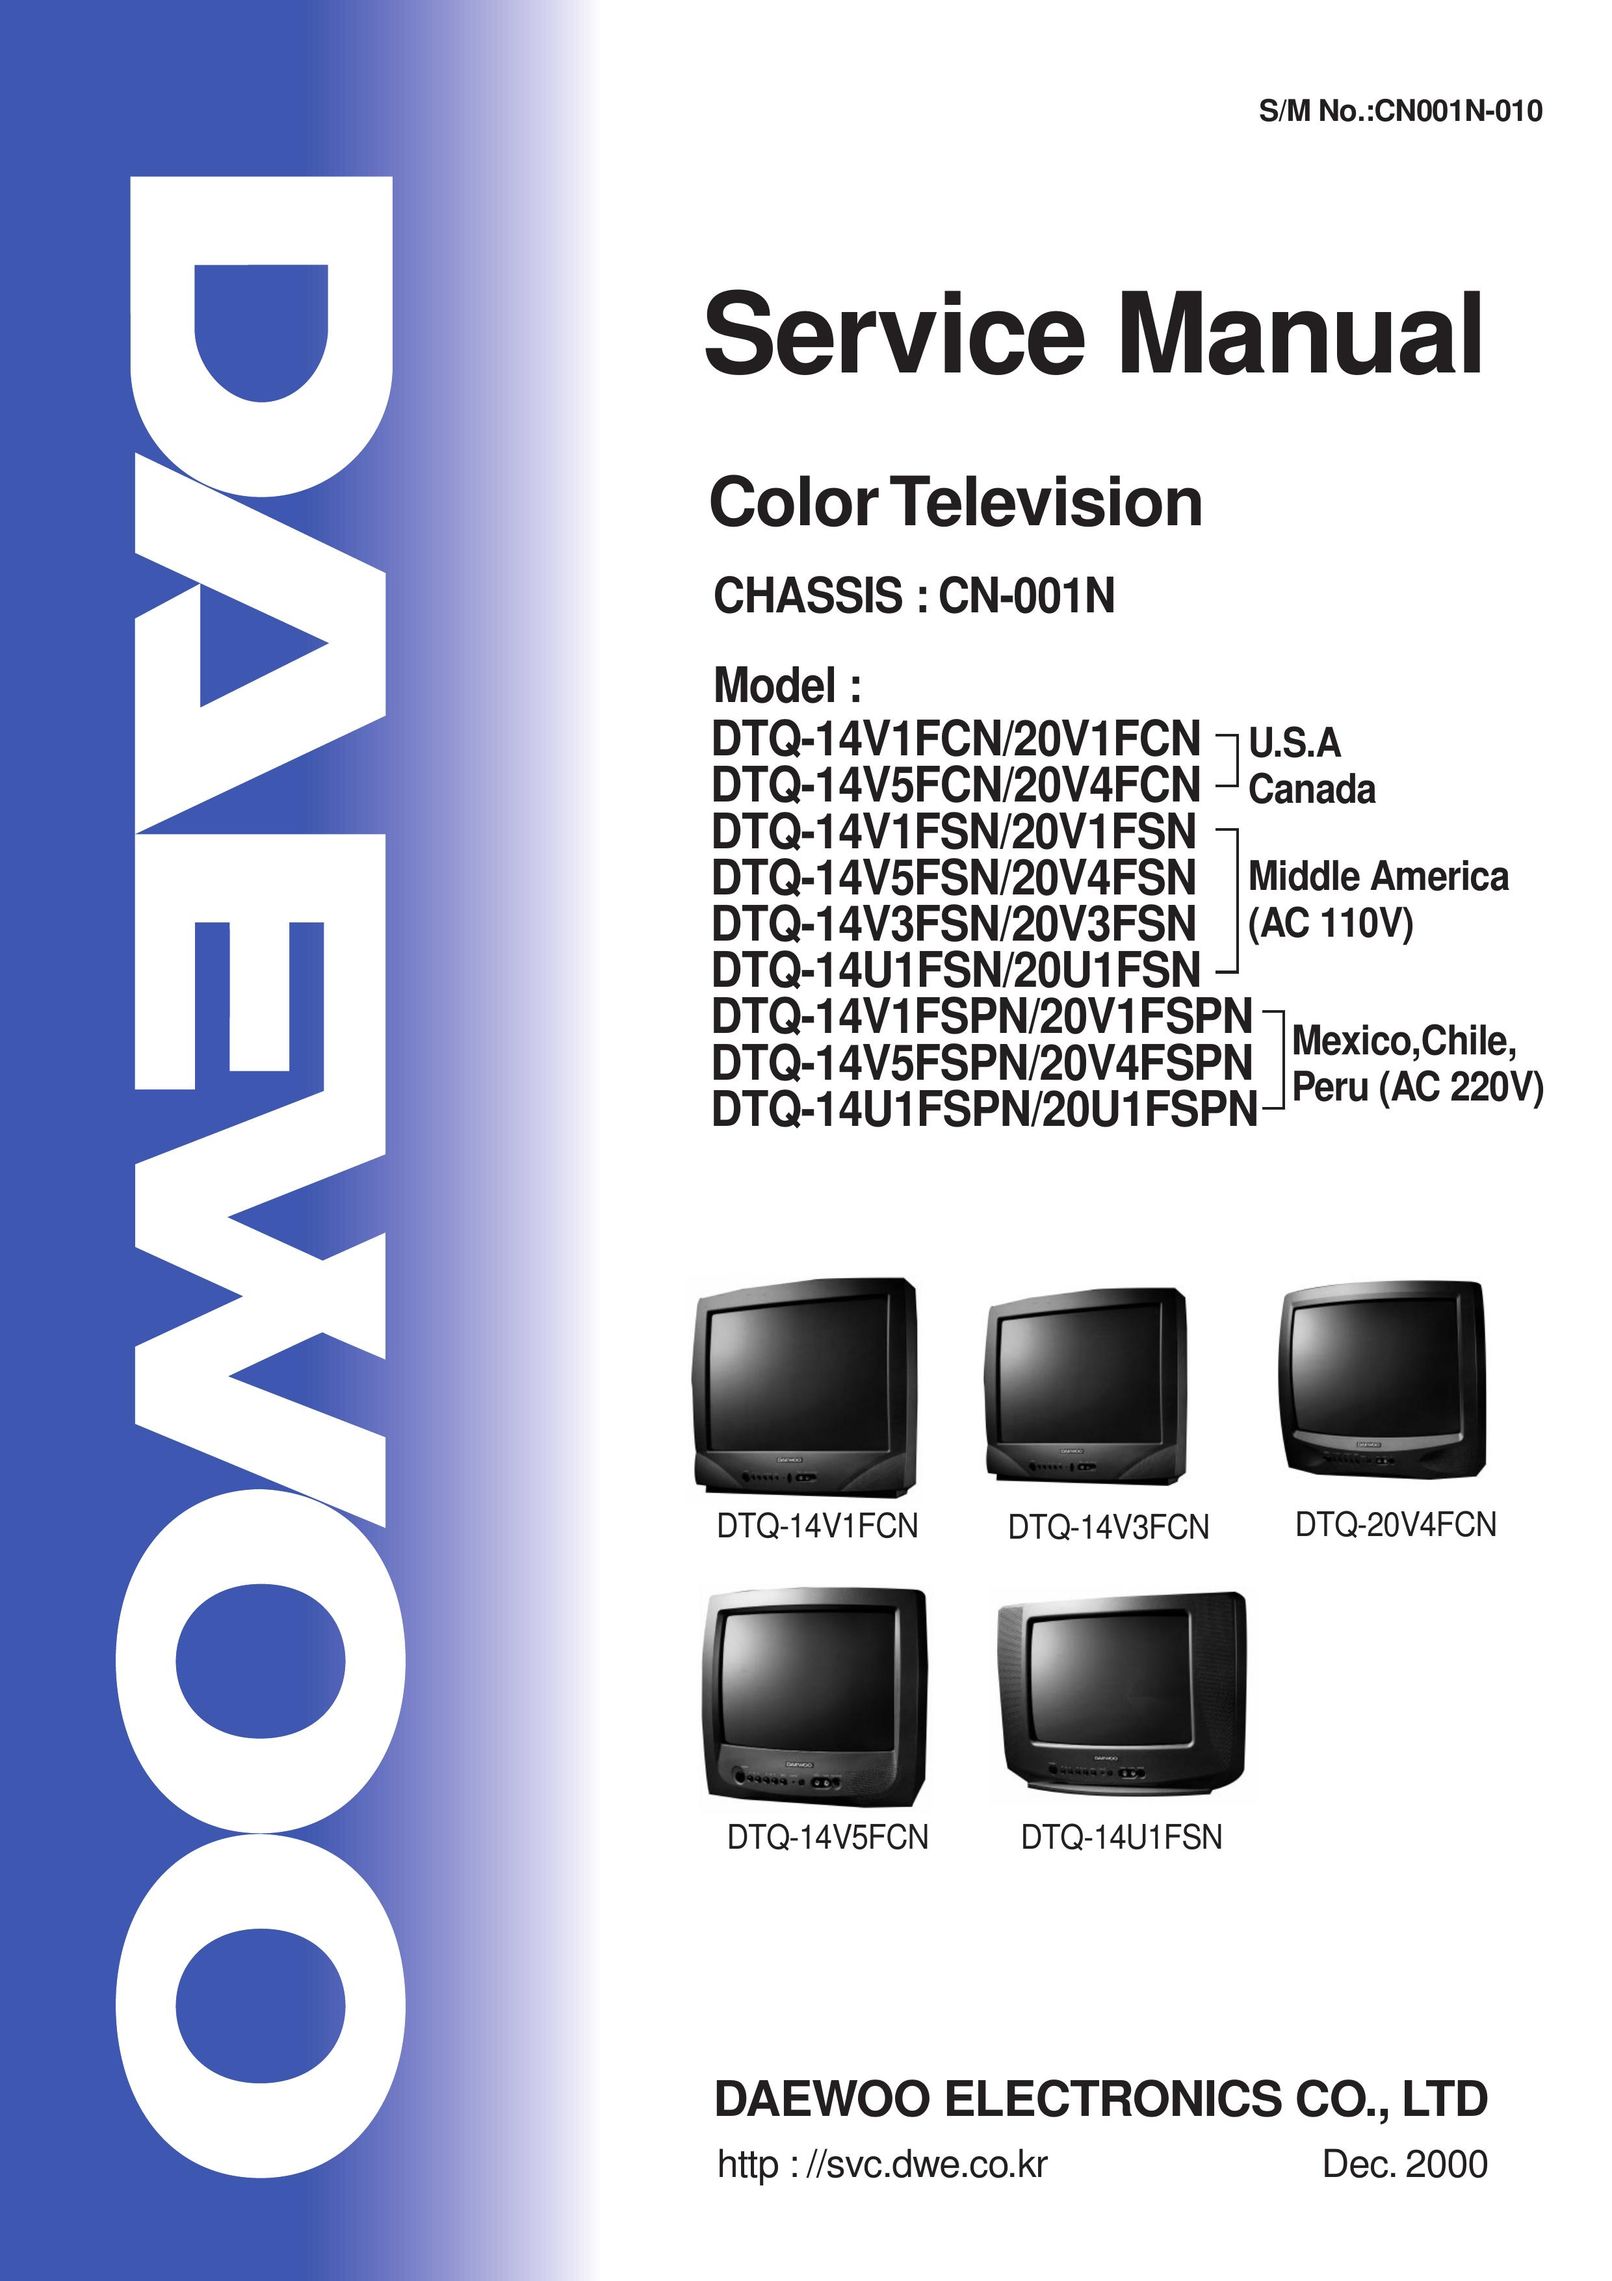 Daewoo 20V4FSPN DTQ-14U1FSPN CRT Television User Manual